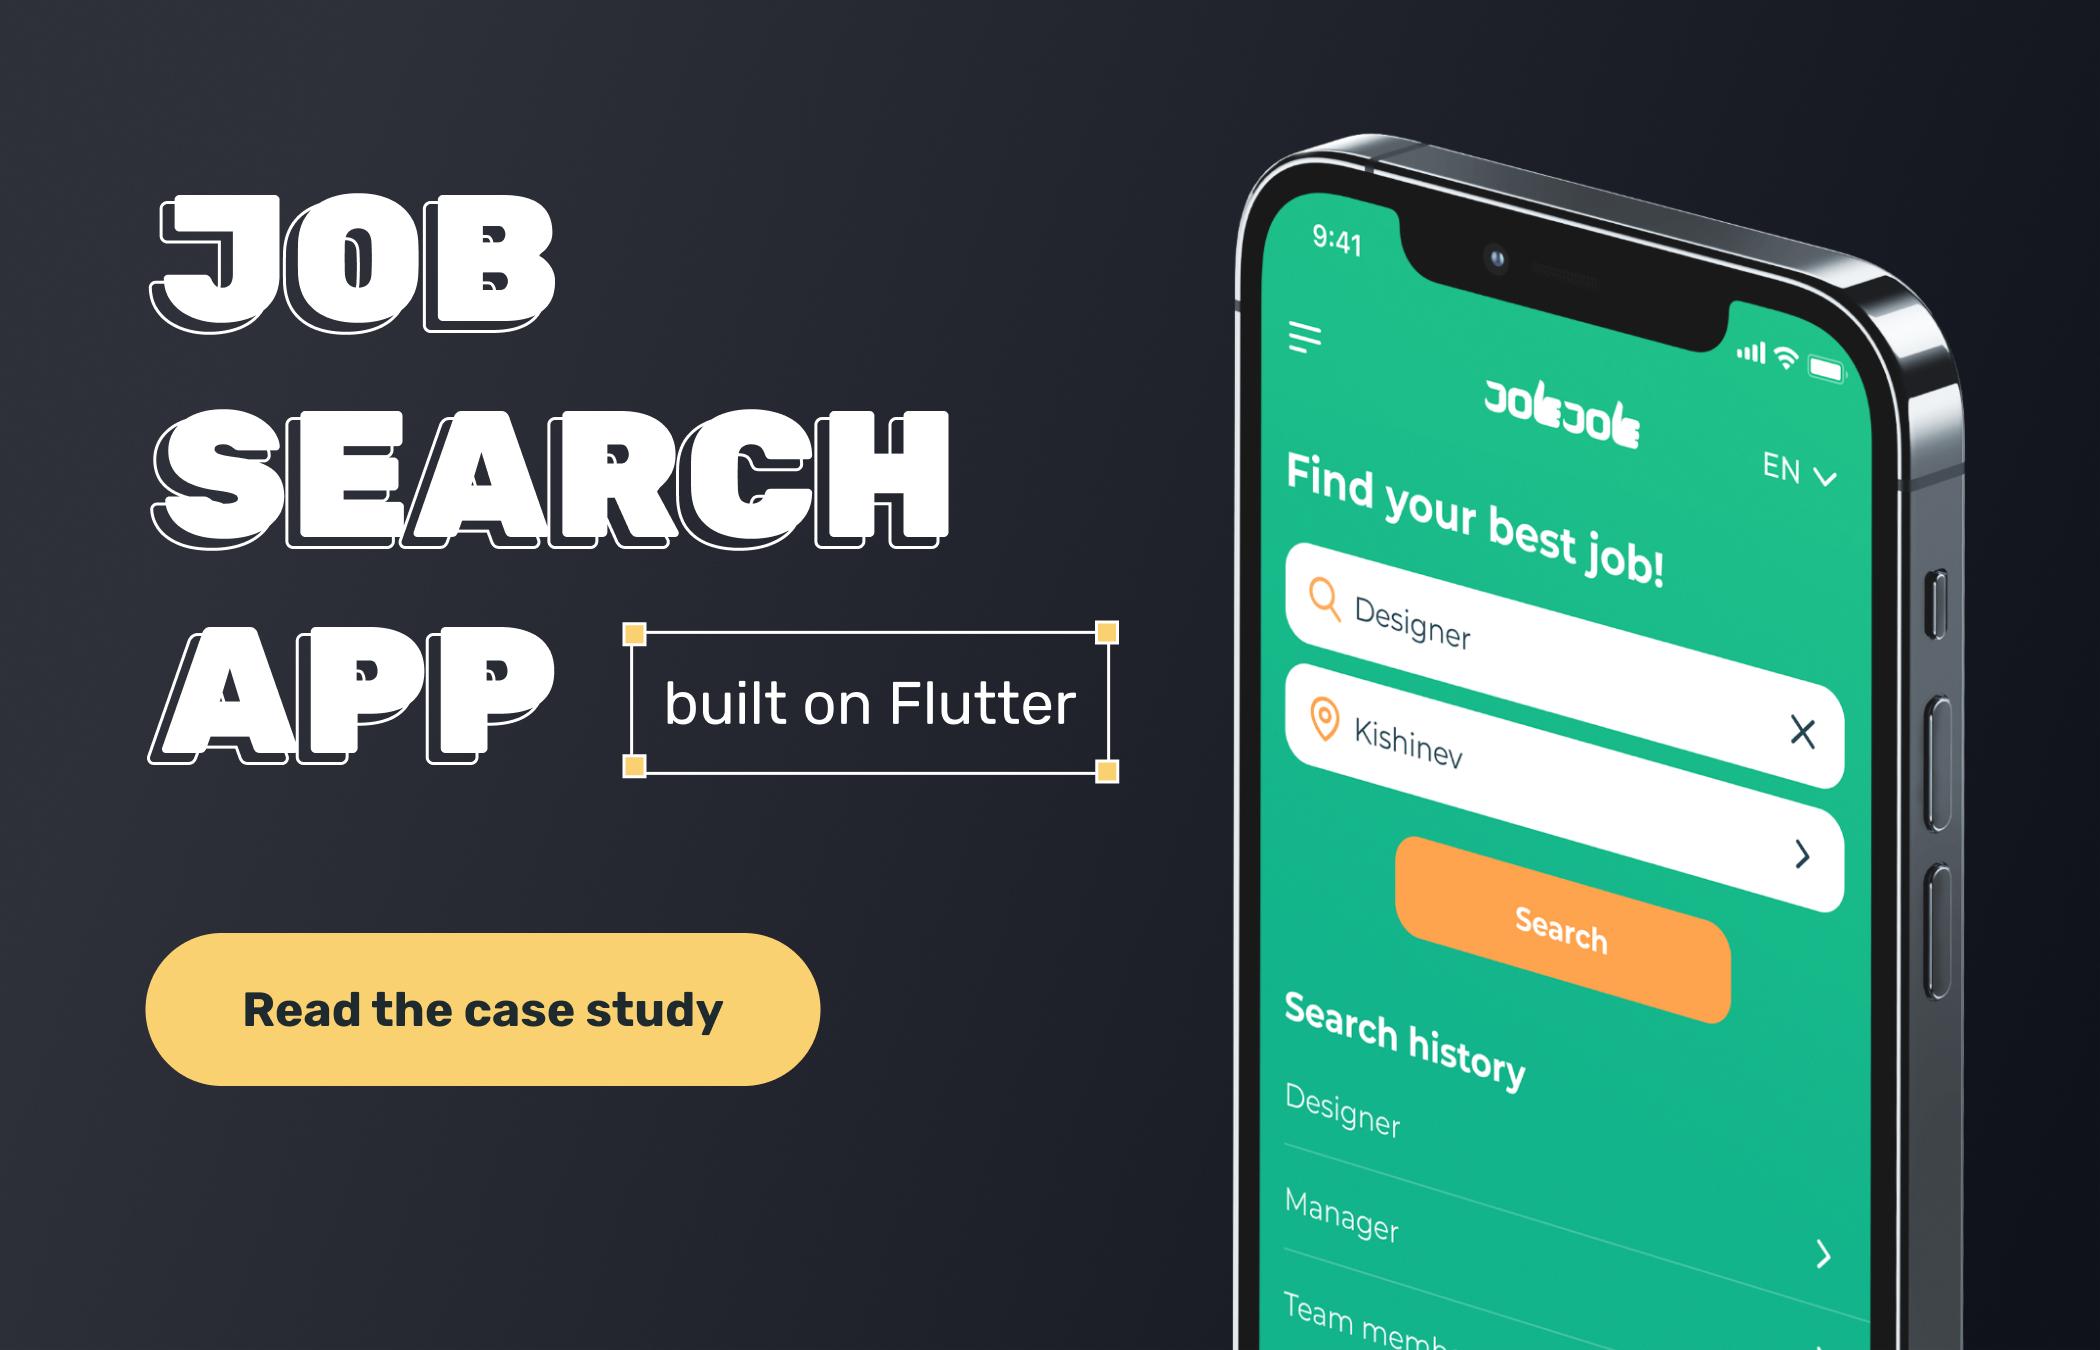 Job search app developed on Flutter